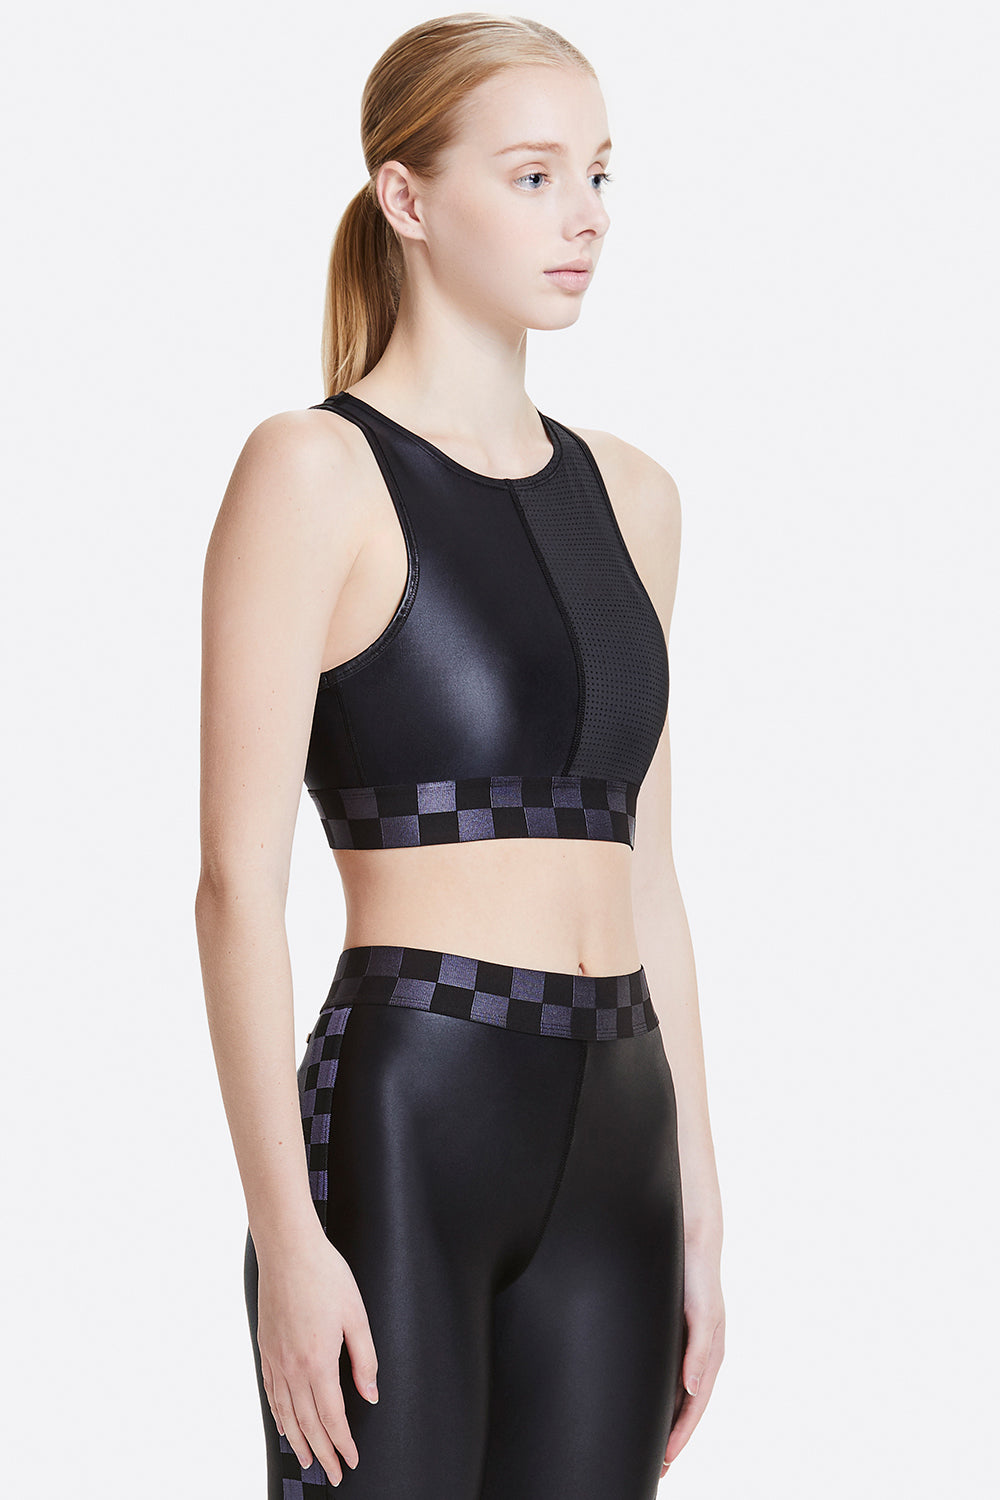 3/4 view of Alala Women's Luxury Athleisure black shiny/mesh sports bra with checkered waistband